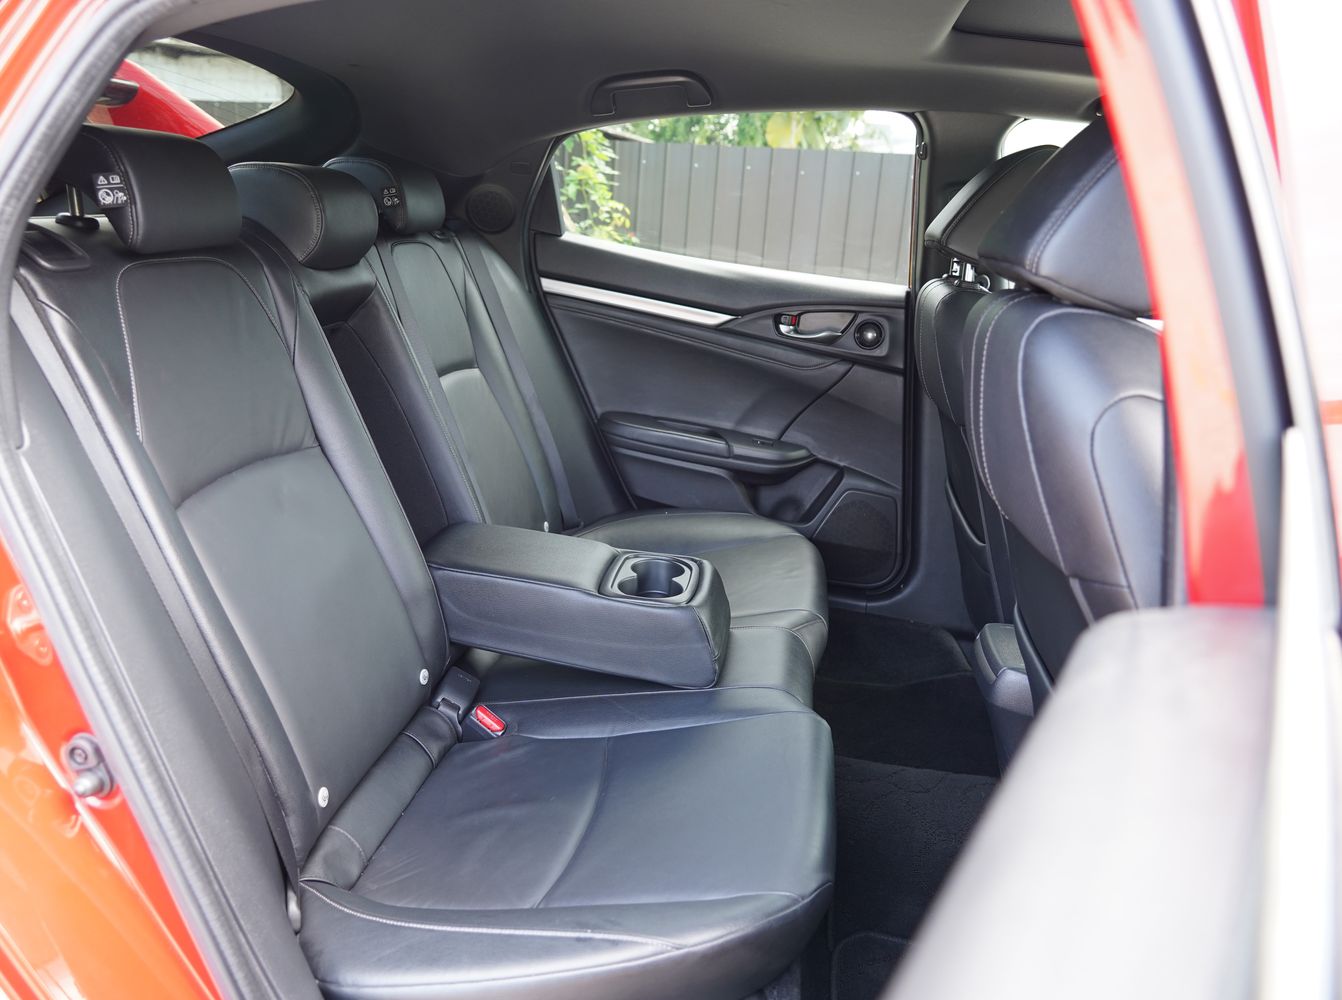 Honda Civic back interior